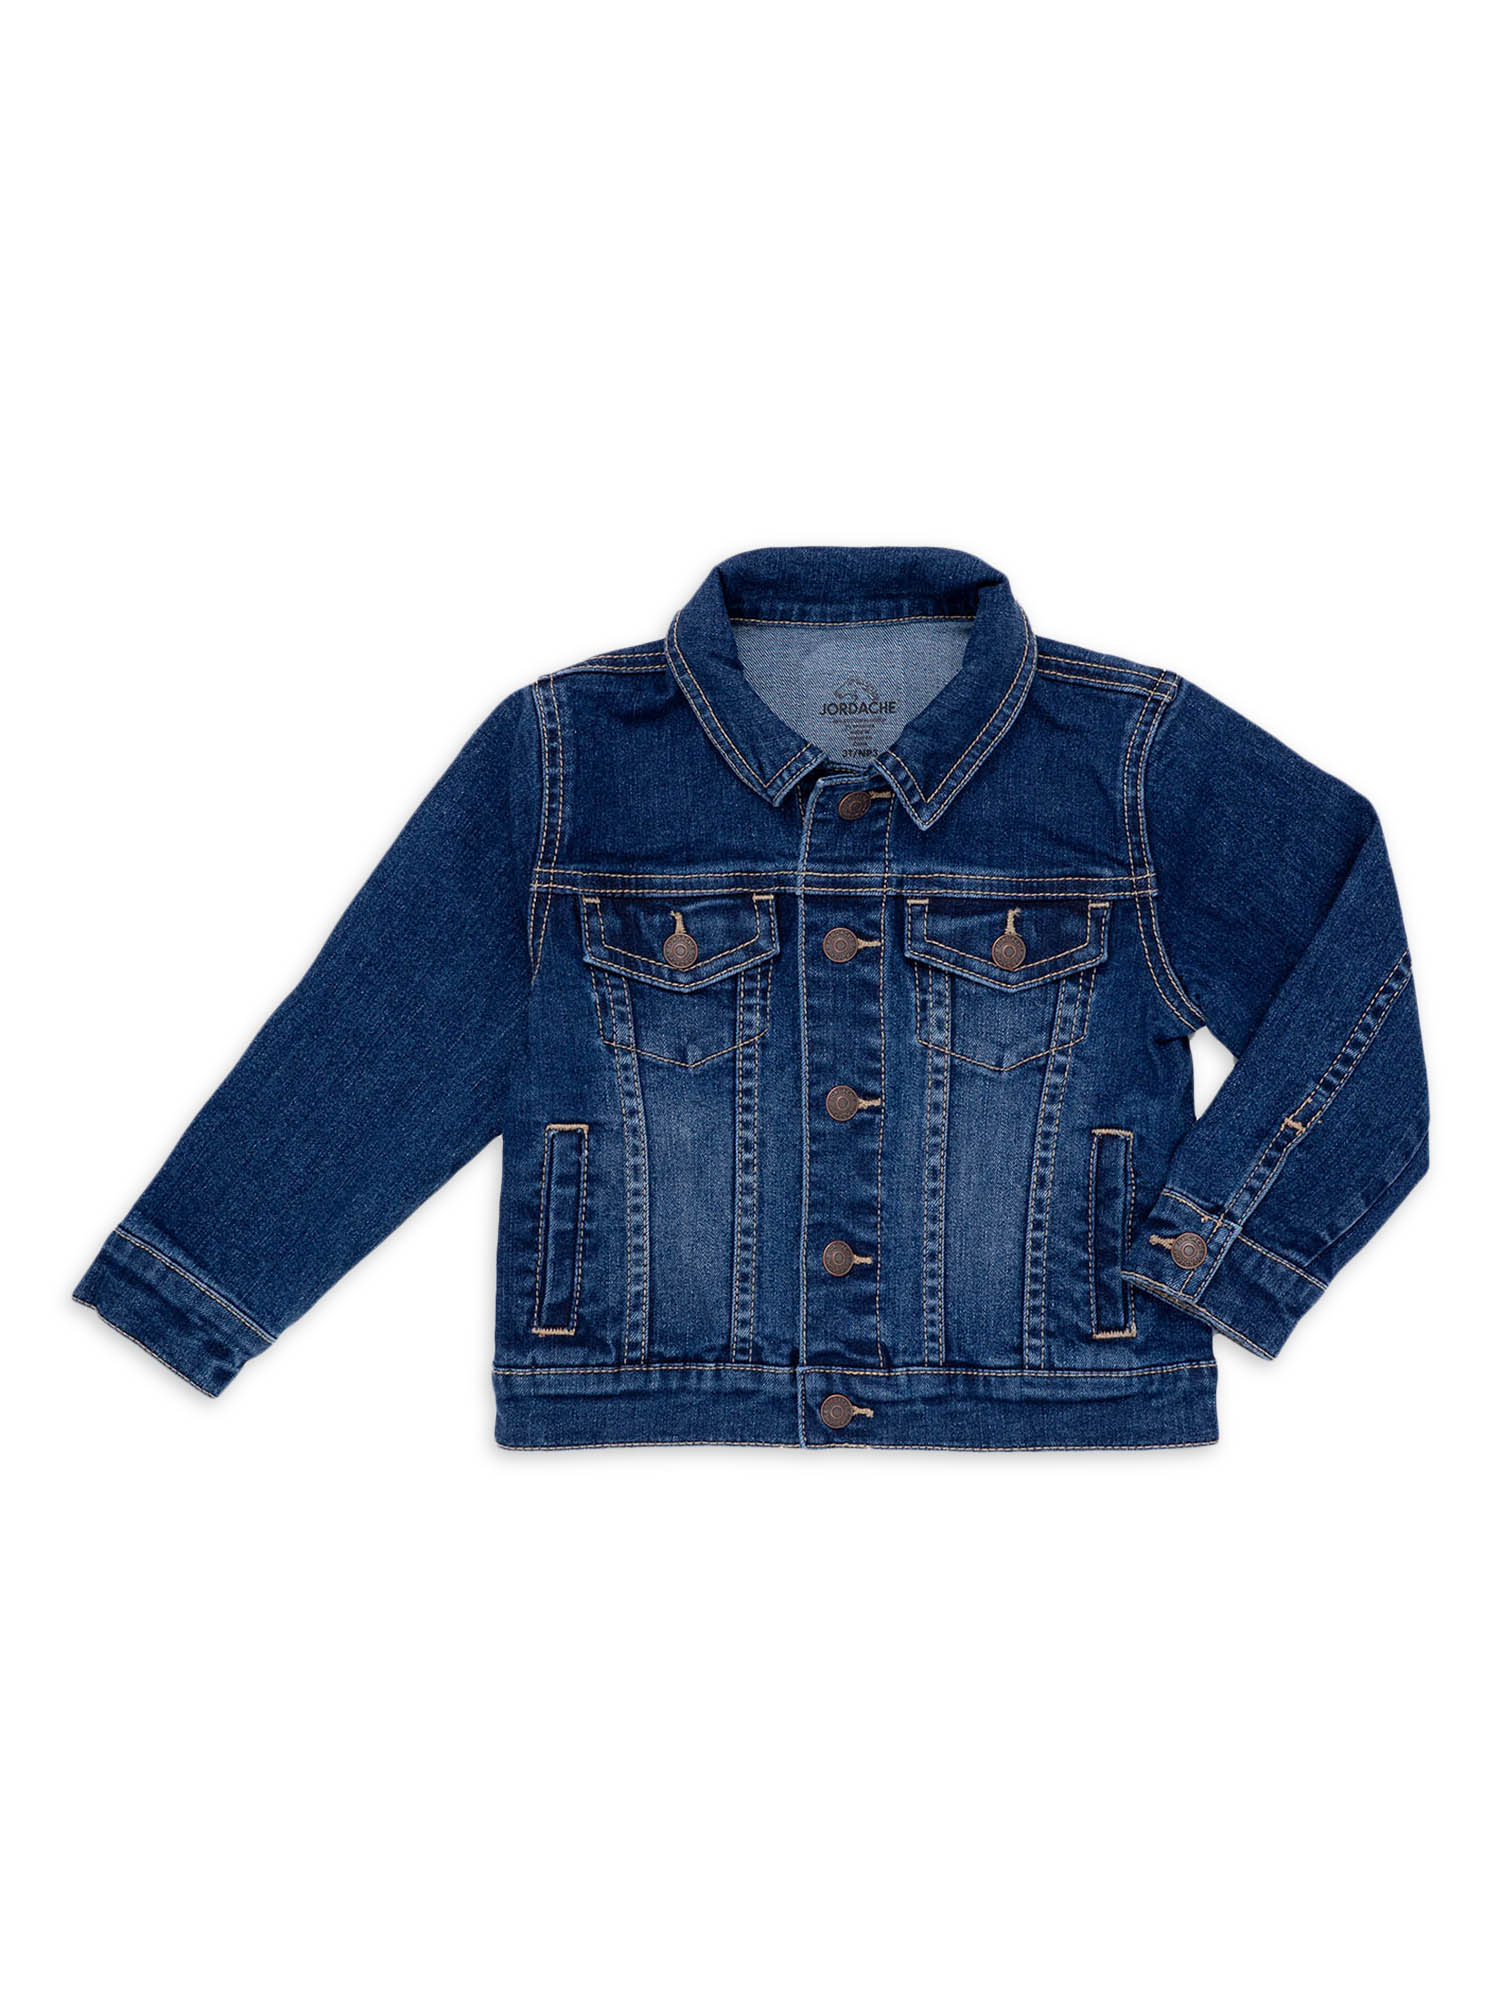 Jordache Long Sleeve Denim Single-Breasted Mid-Length Jacket (Infant or Toddler), 1 Pack - image 1 of 2